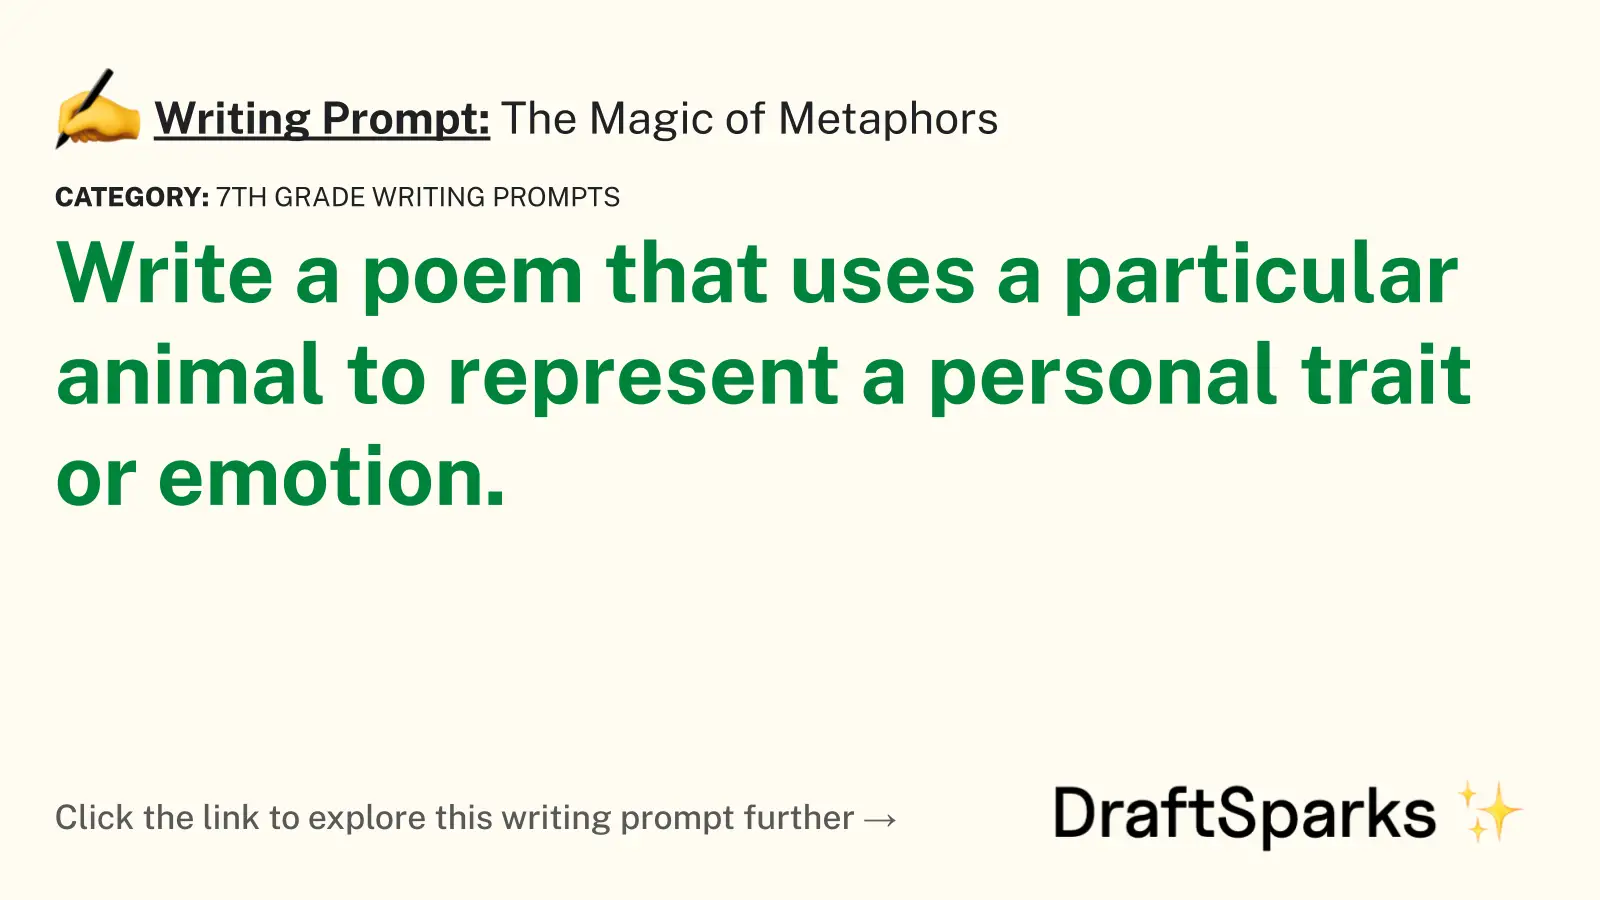 The Magic of Metaphors